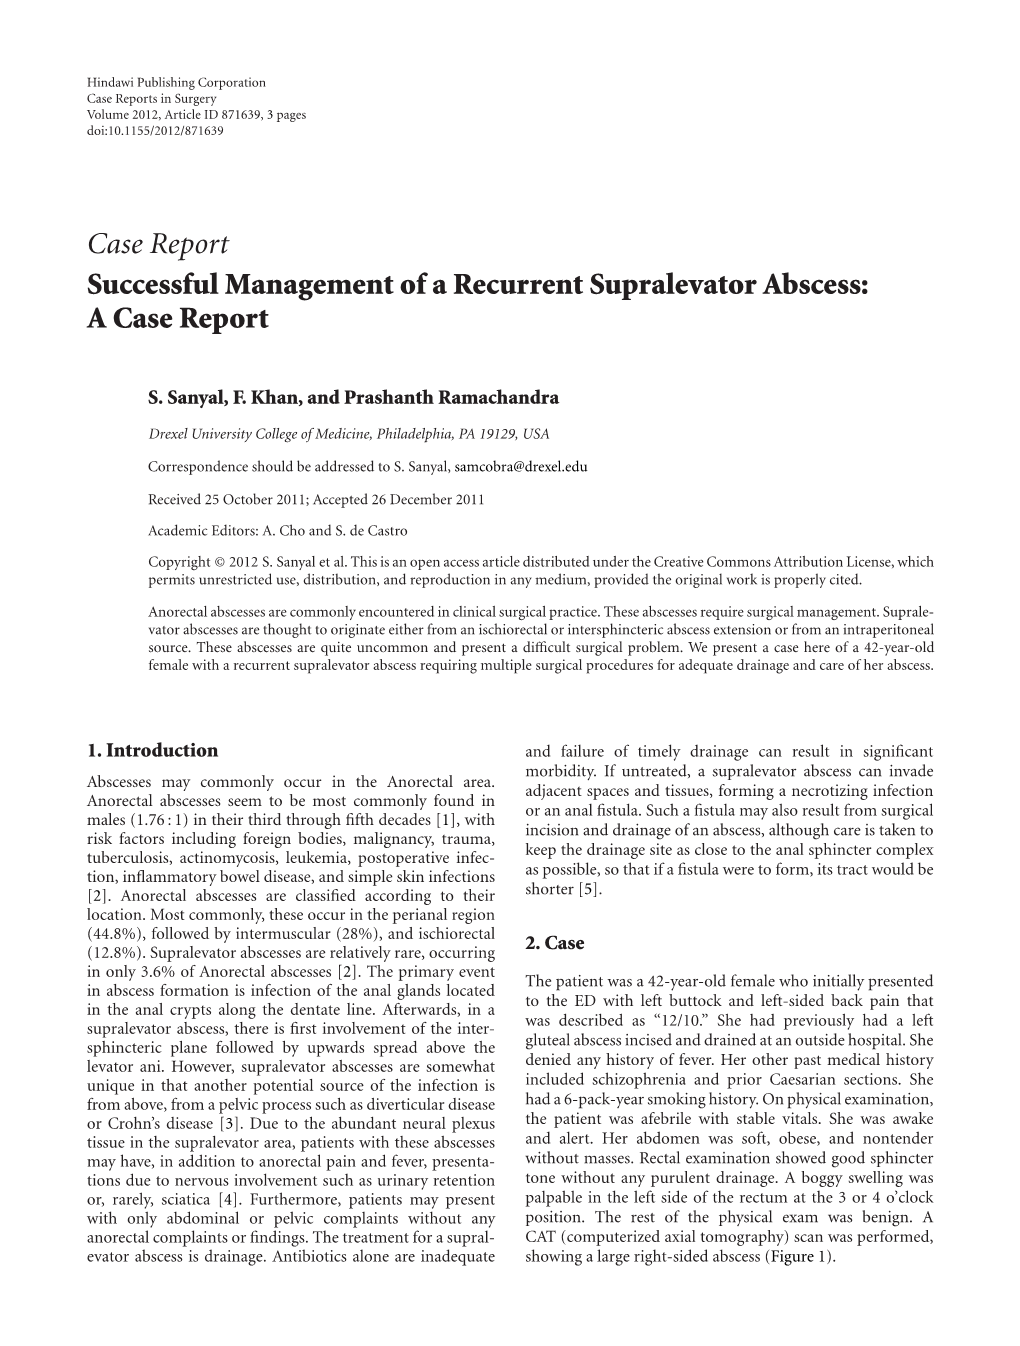 Successful Management of a Recurrent Supralevator Abscess: Acasereport